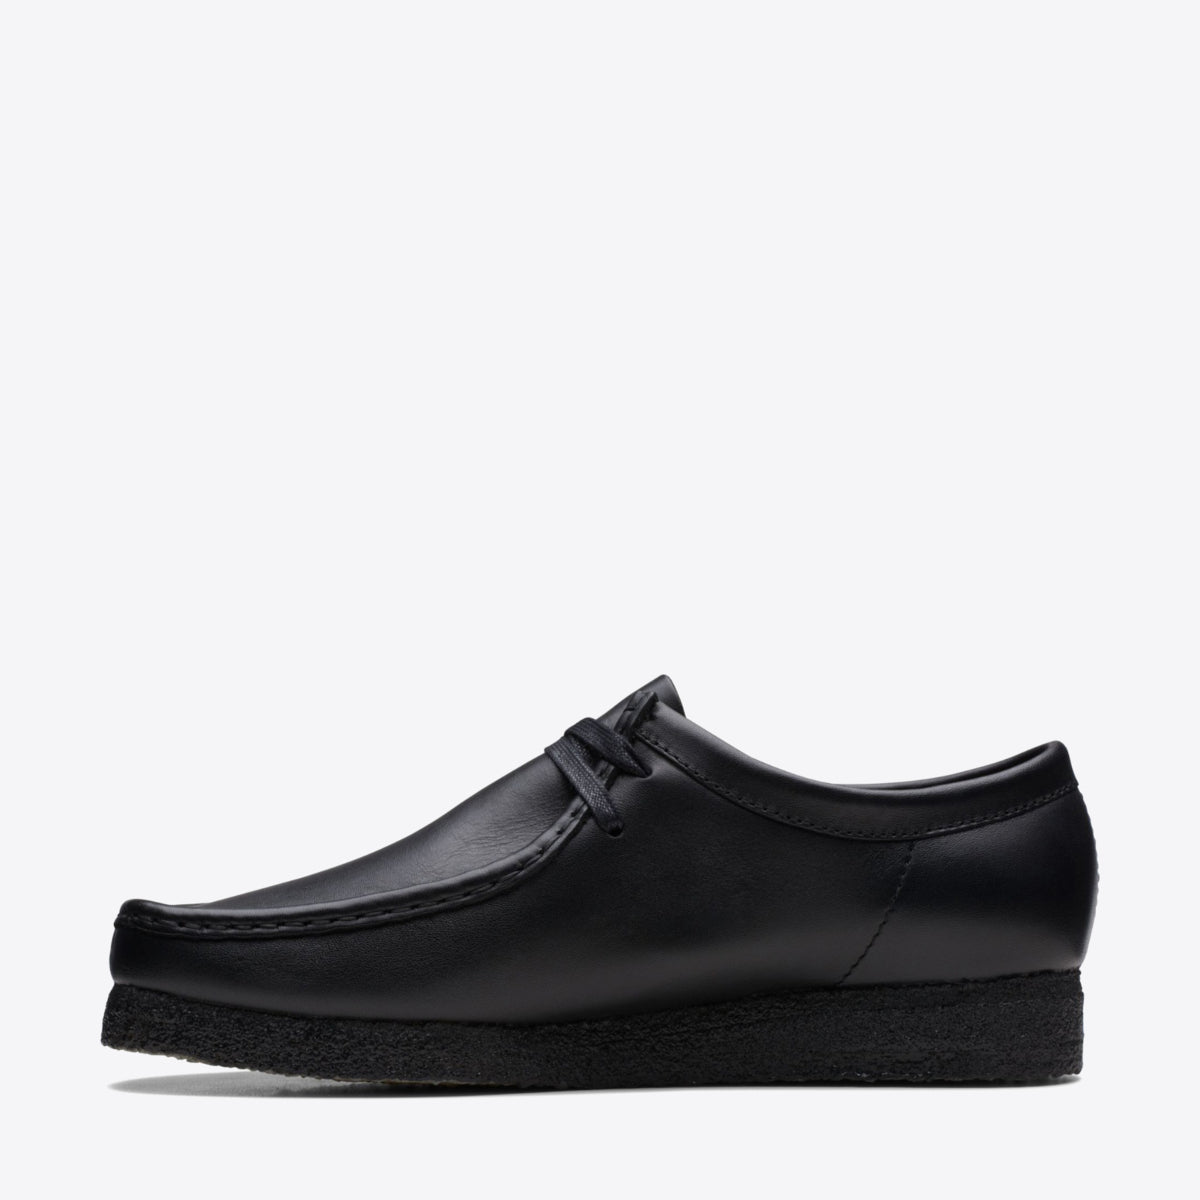 CLARKS Wallabee Shoe Leather Black - Image 5